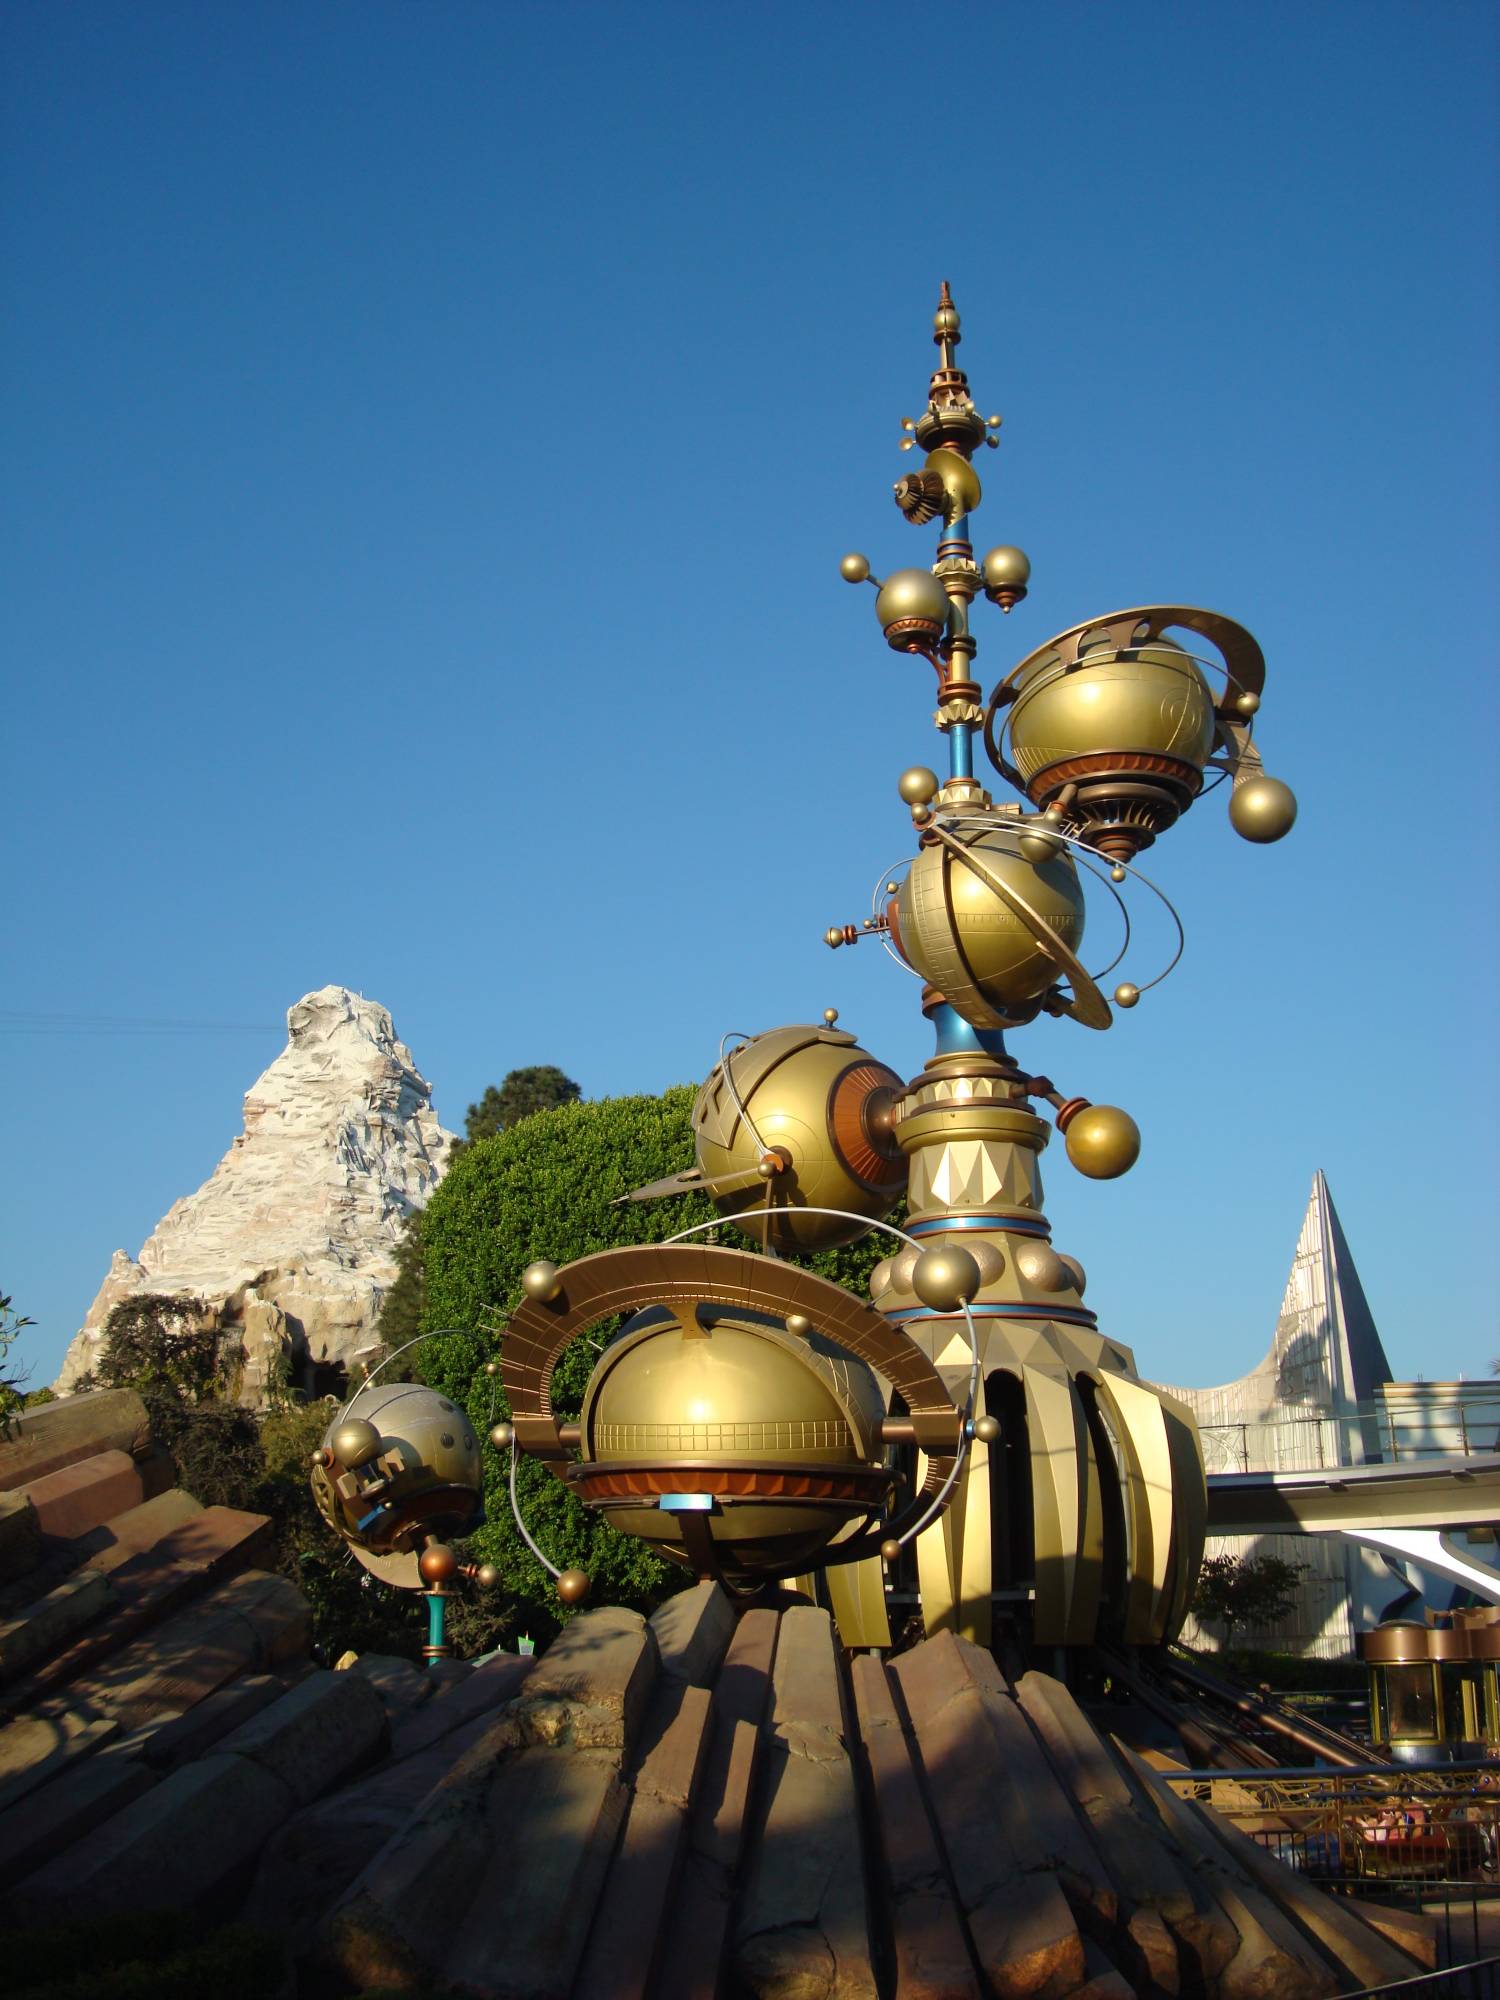 Disneyland - Tomorrowland entrance